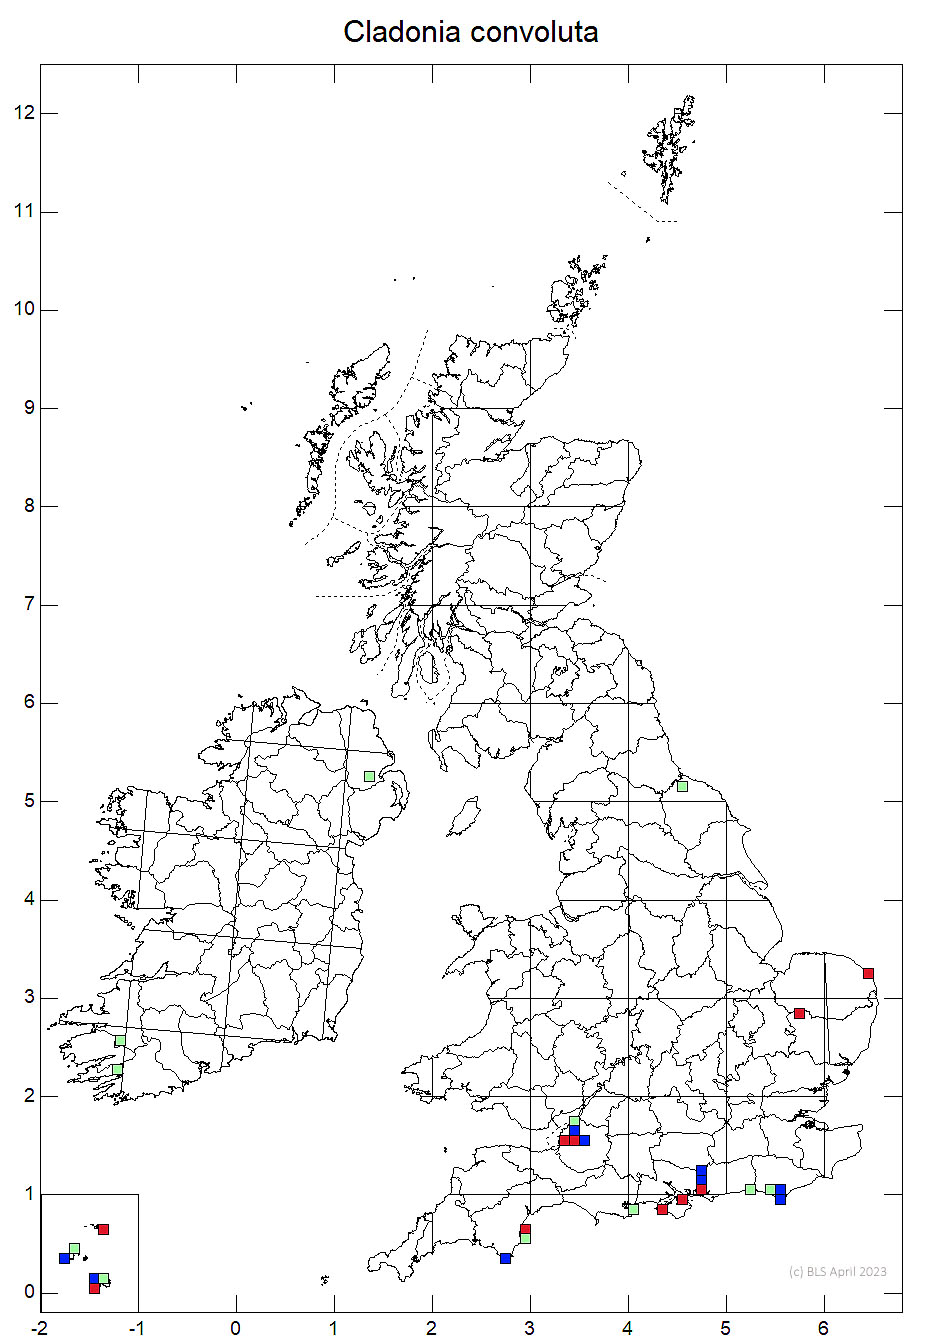 Cladonia convoluta 10km sq distribution map